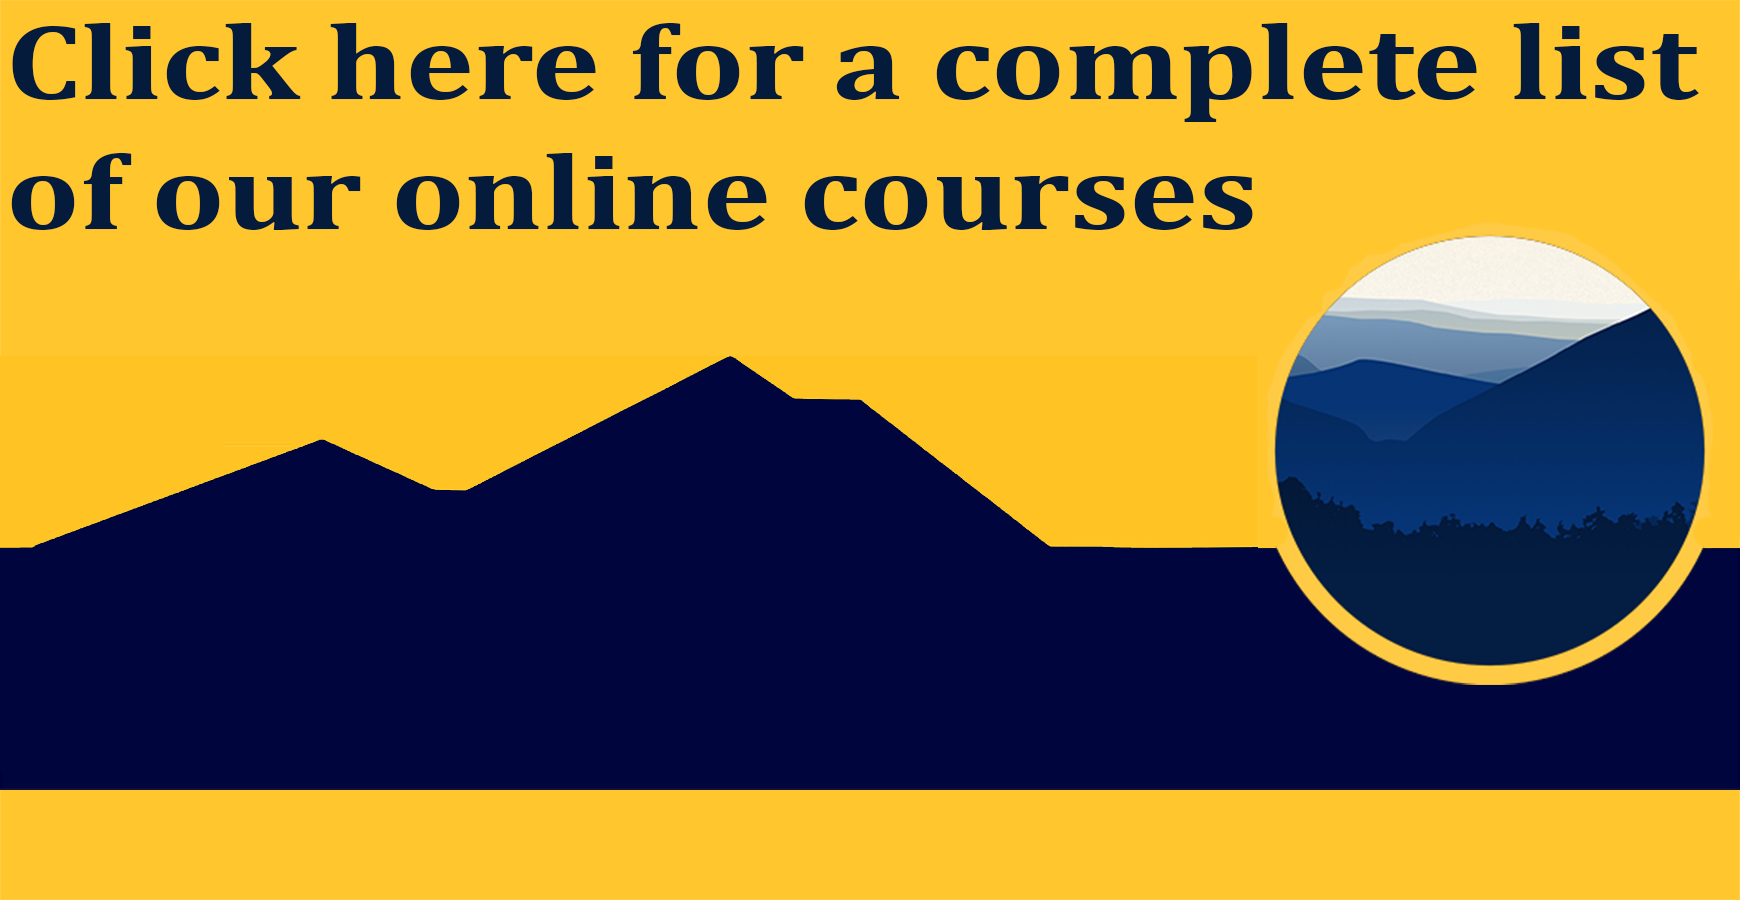 List of online courses